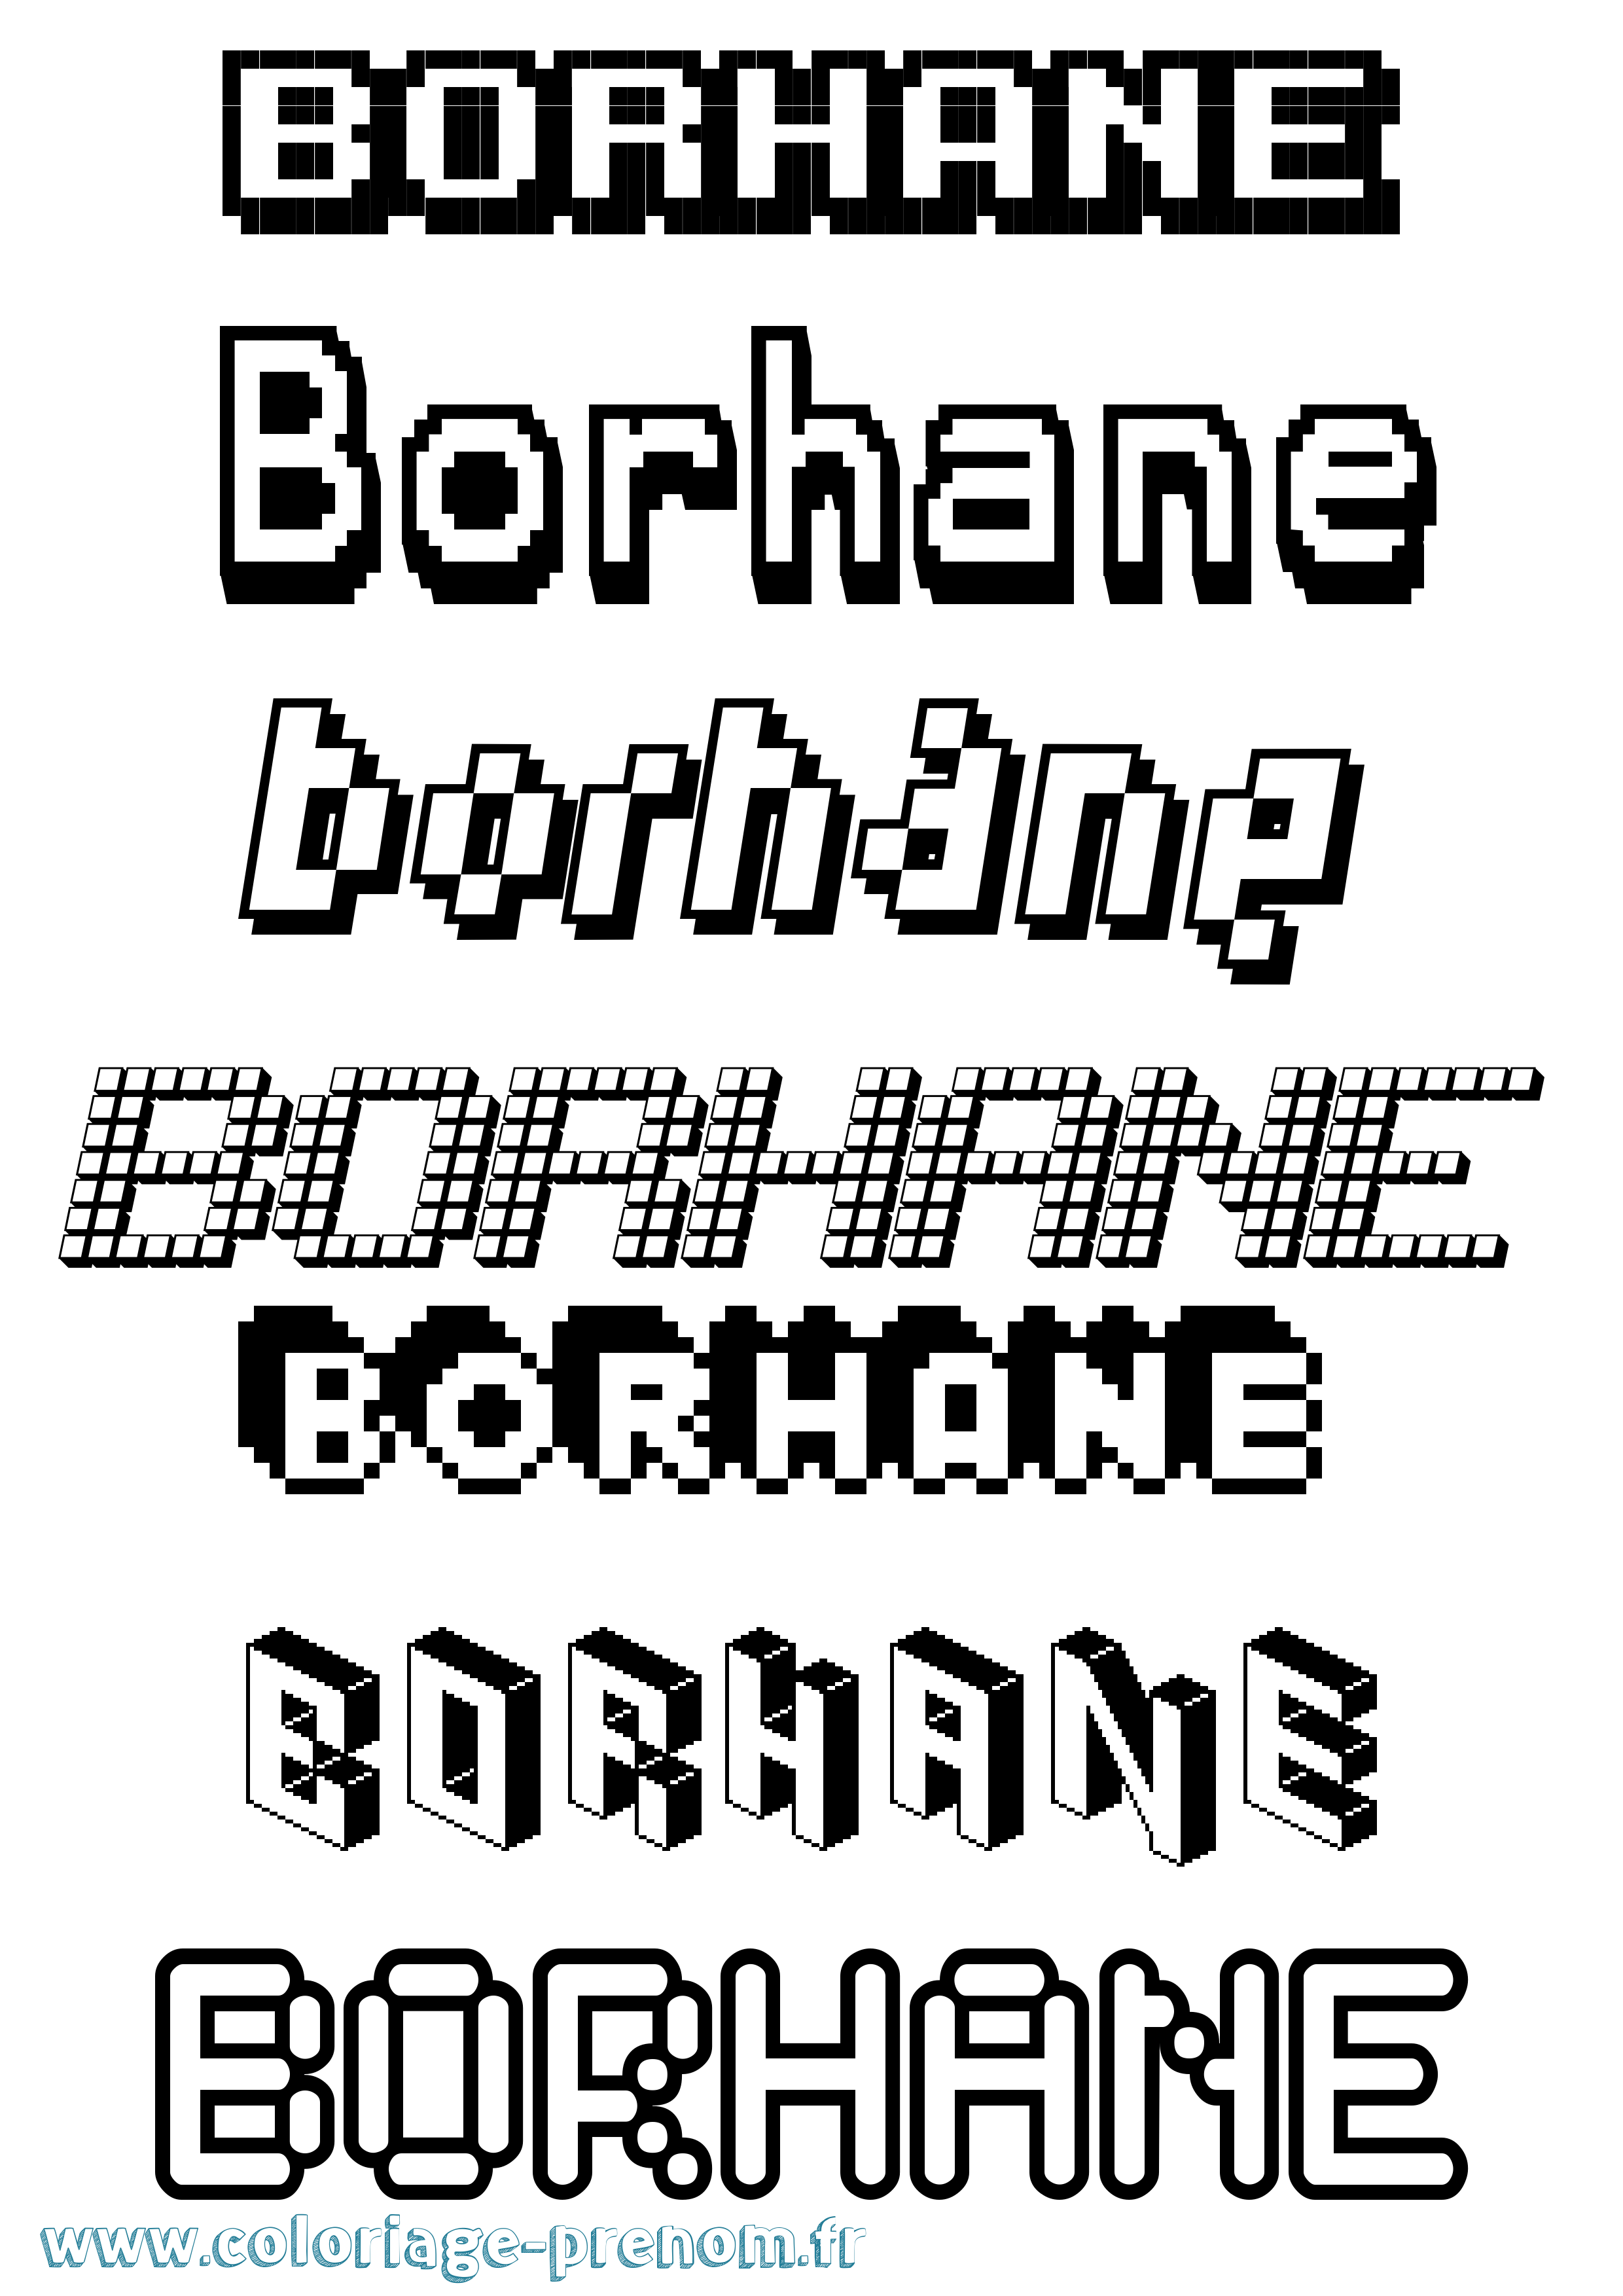 Coloriage prénom Borhane Pixel